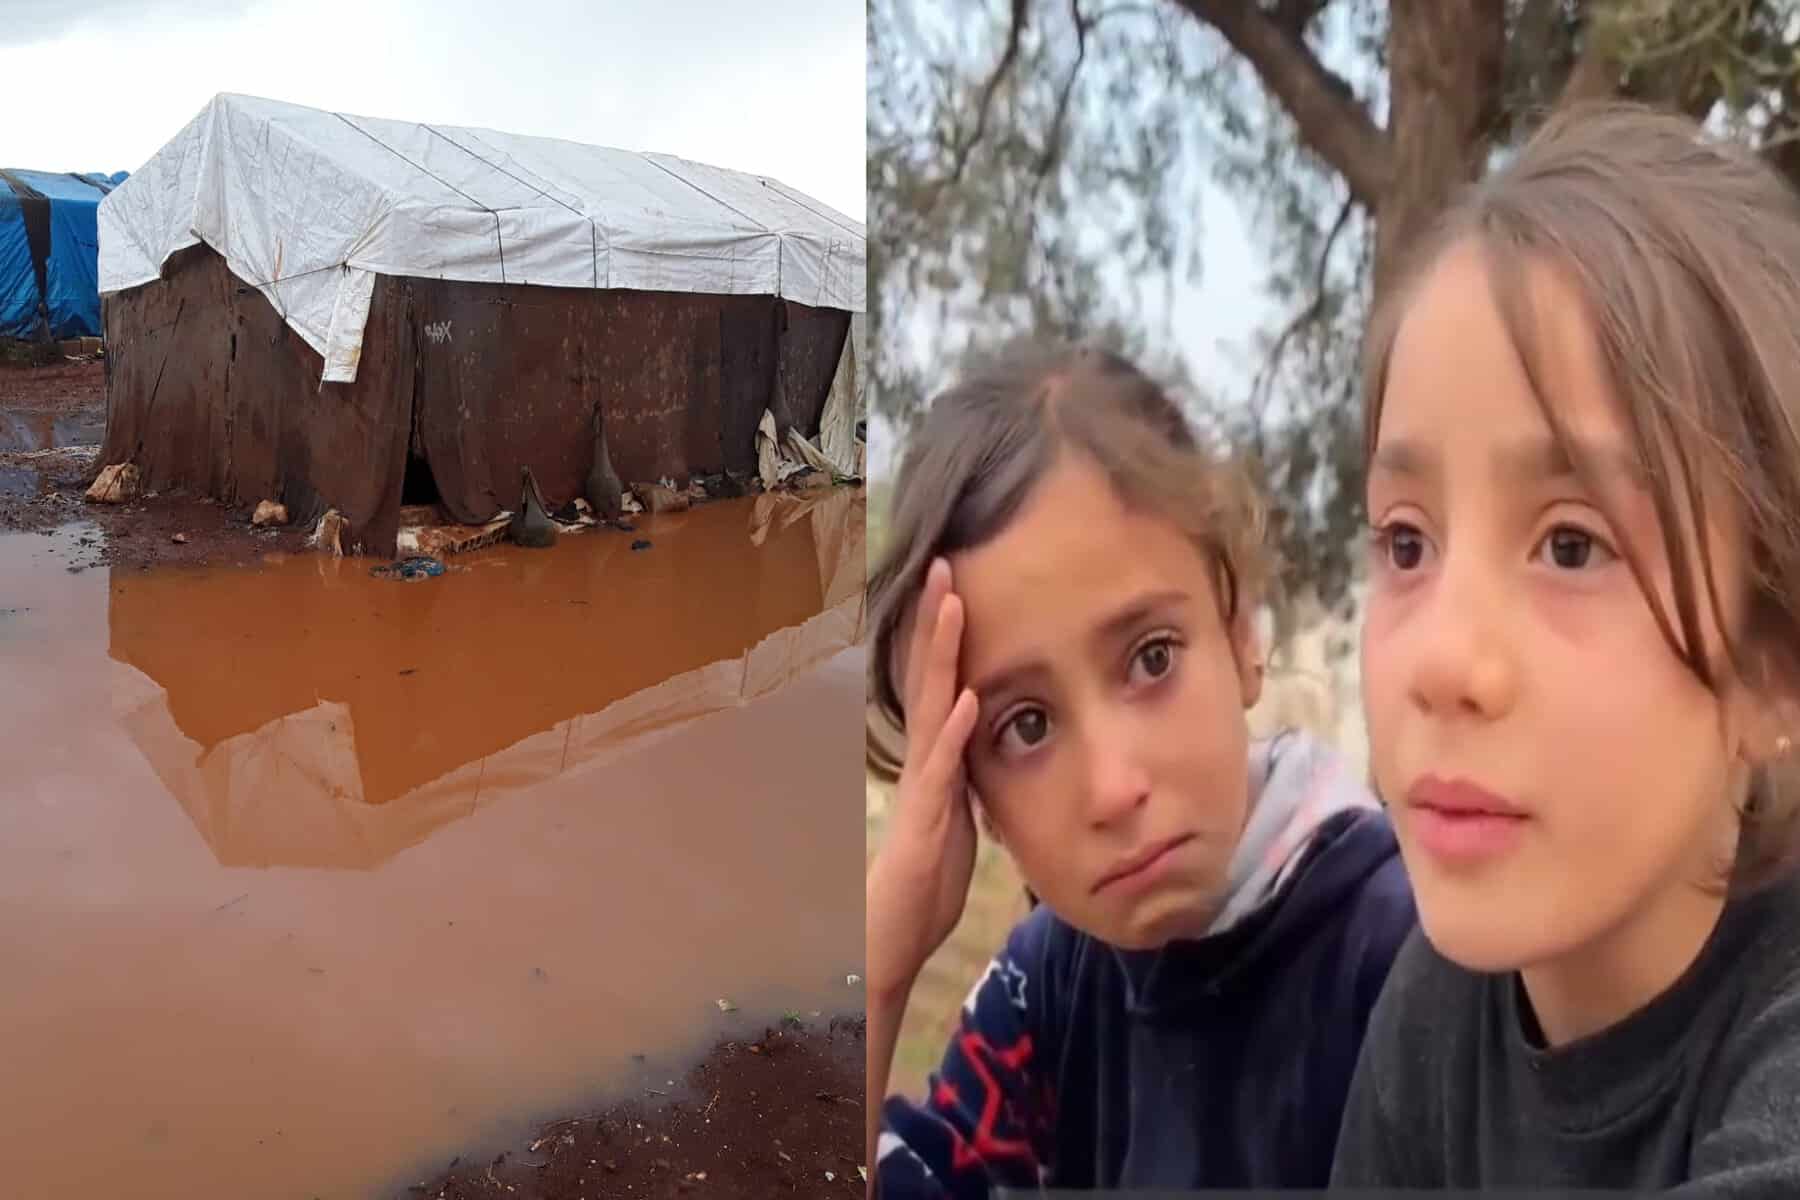  alarabtrend.com دمعة طفلة سورية تبكي القلوب